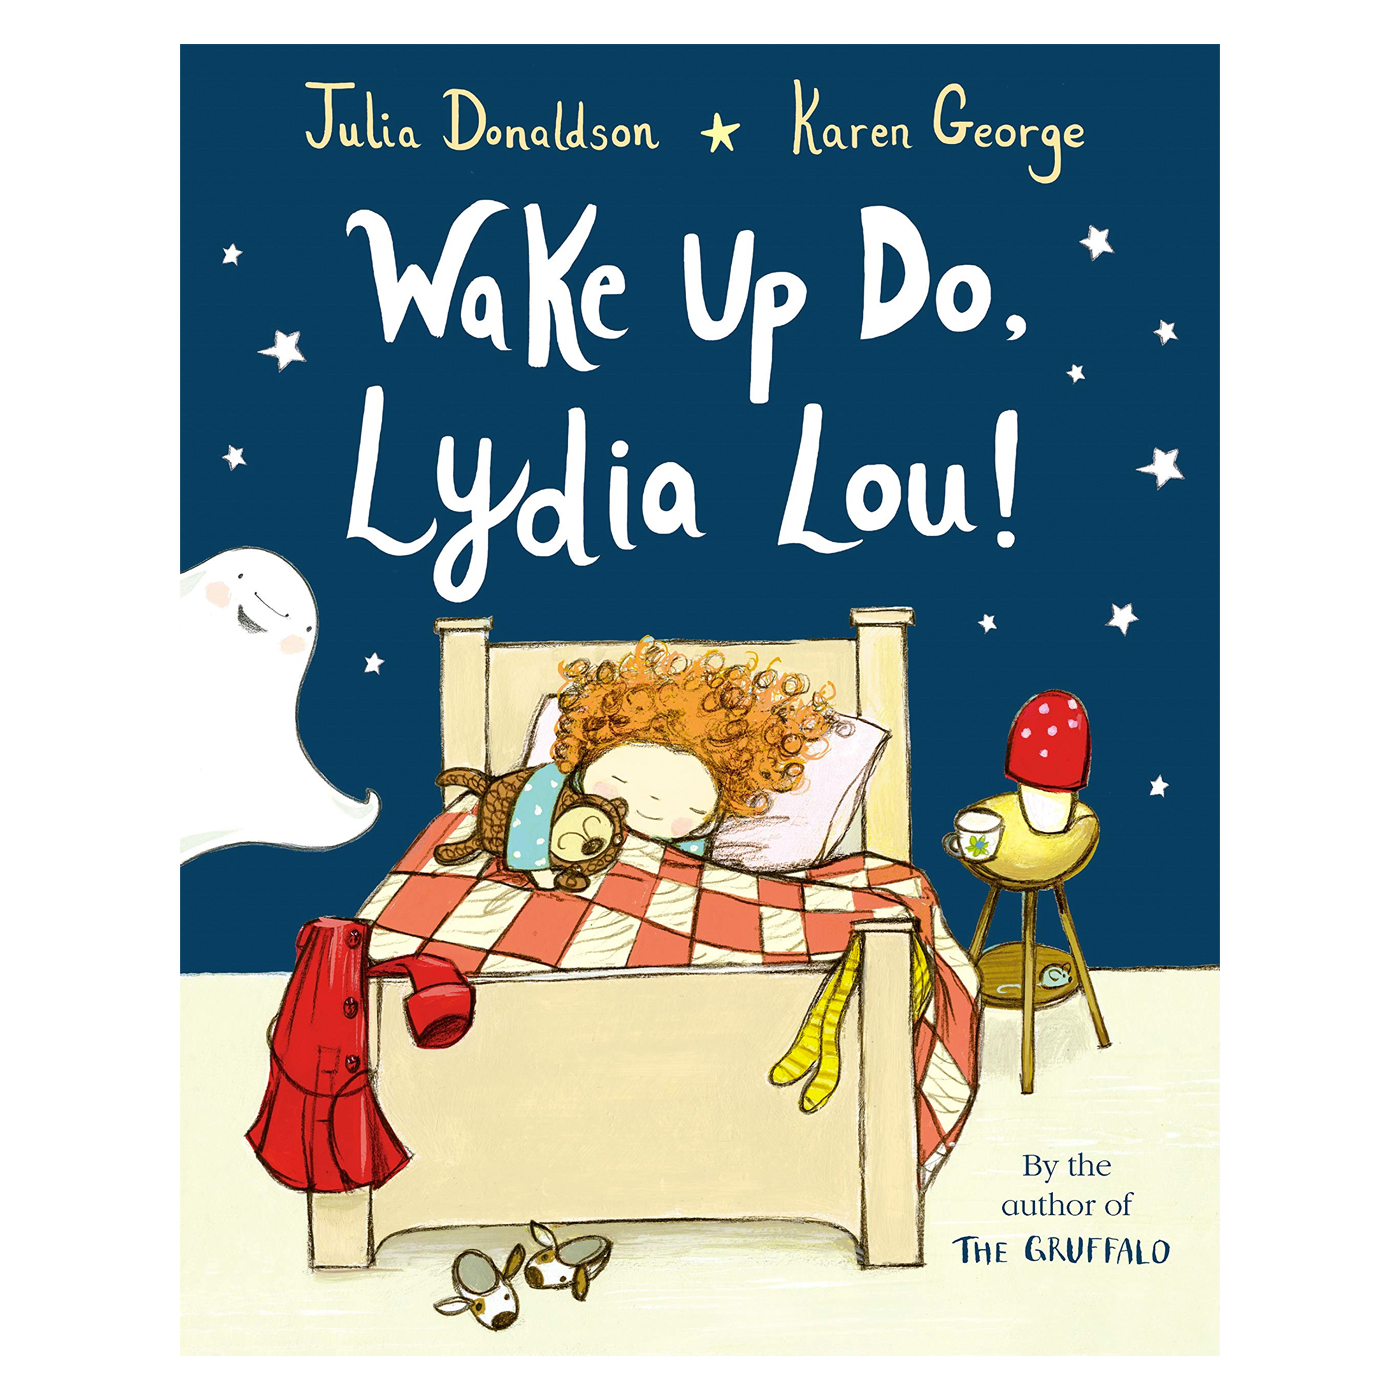 PAN MACMILLAN Wake Up Do, Lydia Lou!